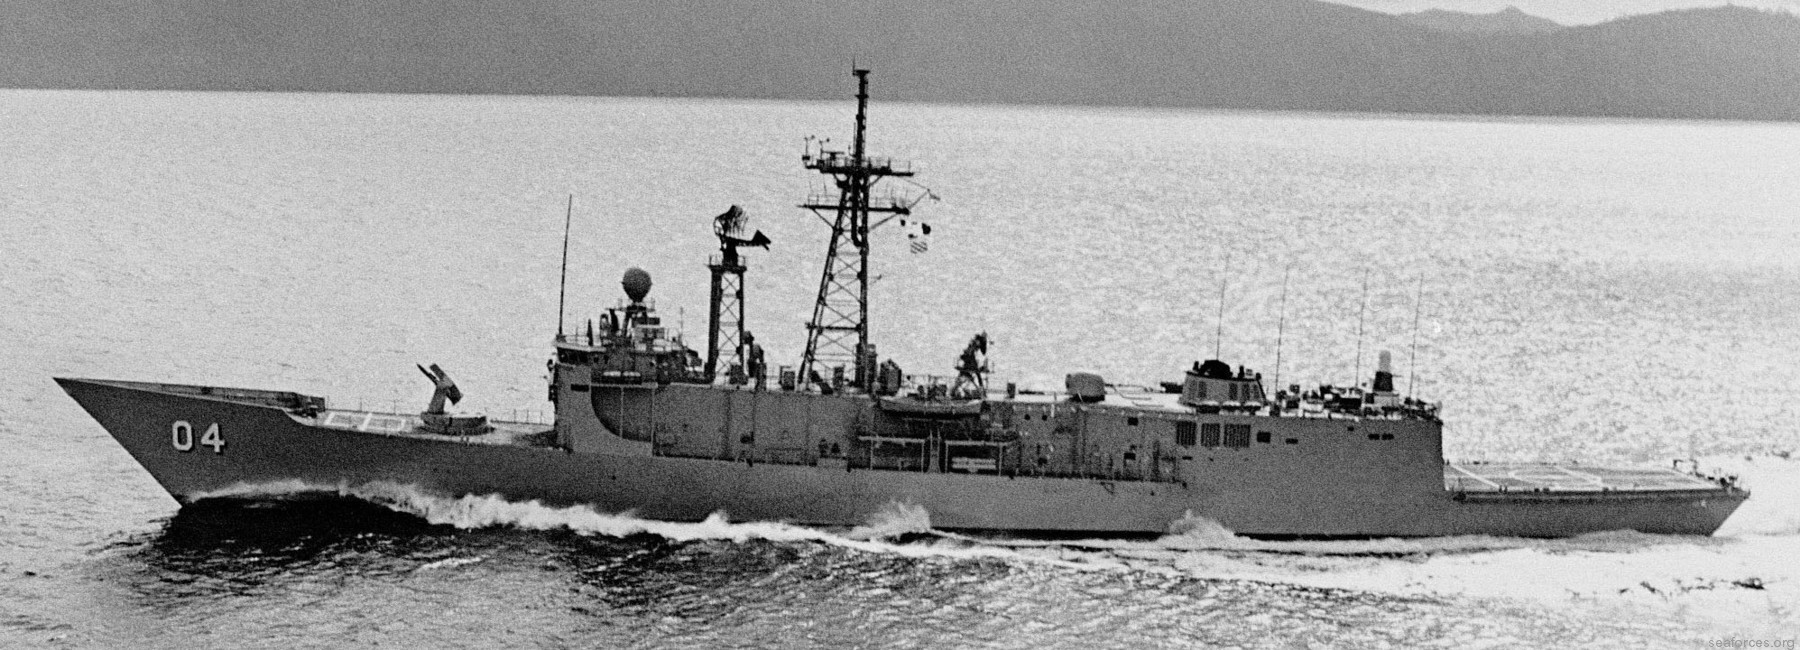 ffg-04 hmas darwin adelaide class frigate royal australian navy 1984 19